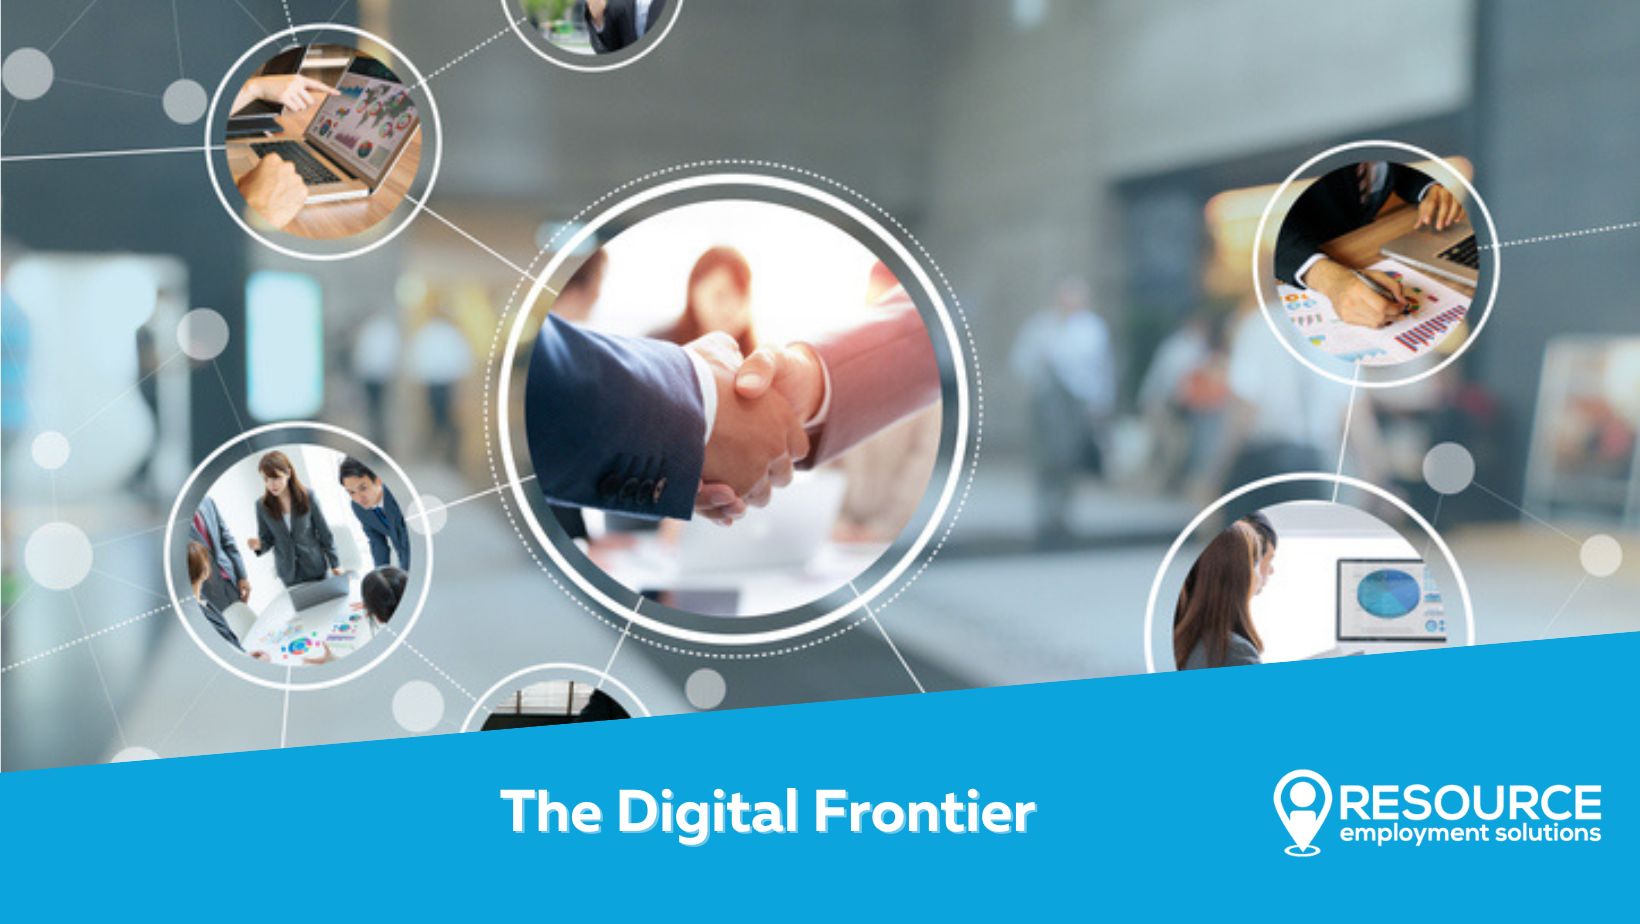 The Digital Frontier: Revolutionizing Human Capital Management Through Technology